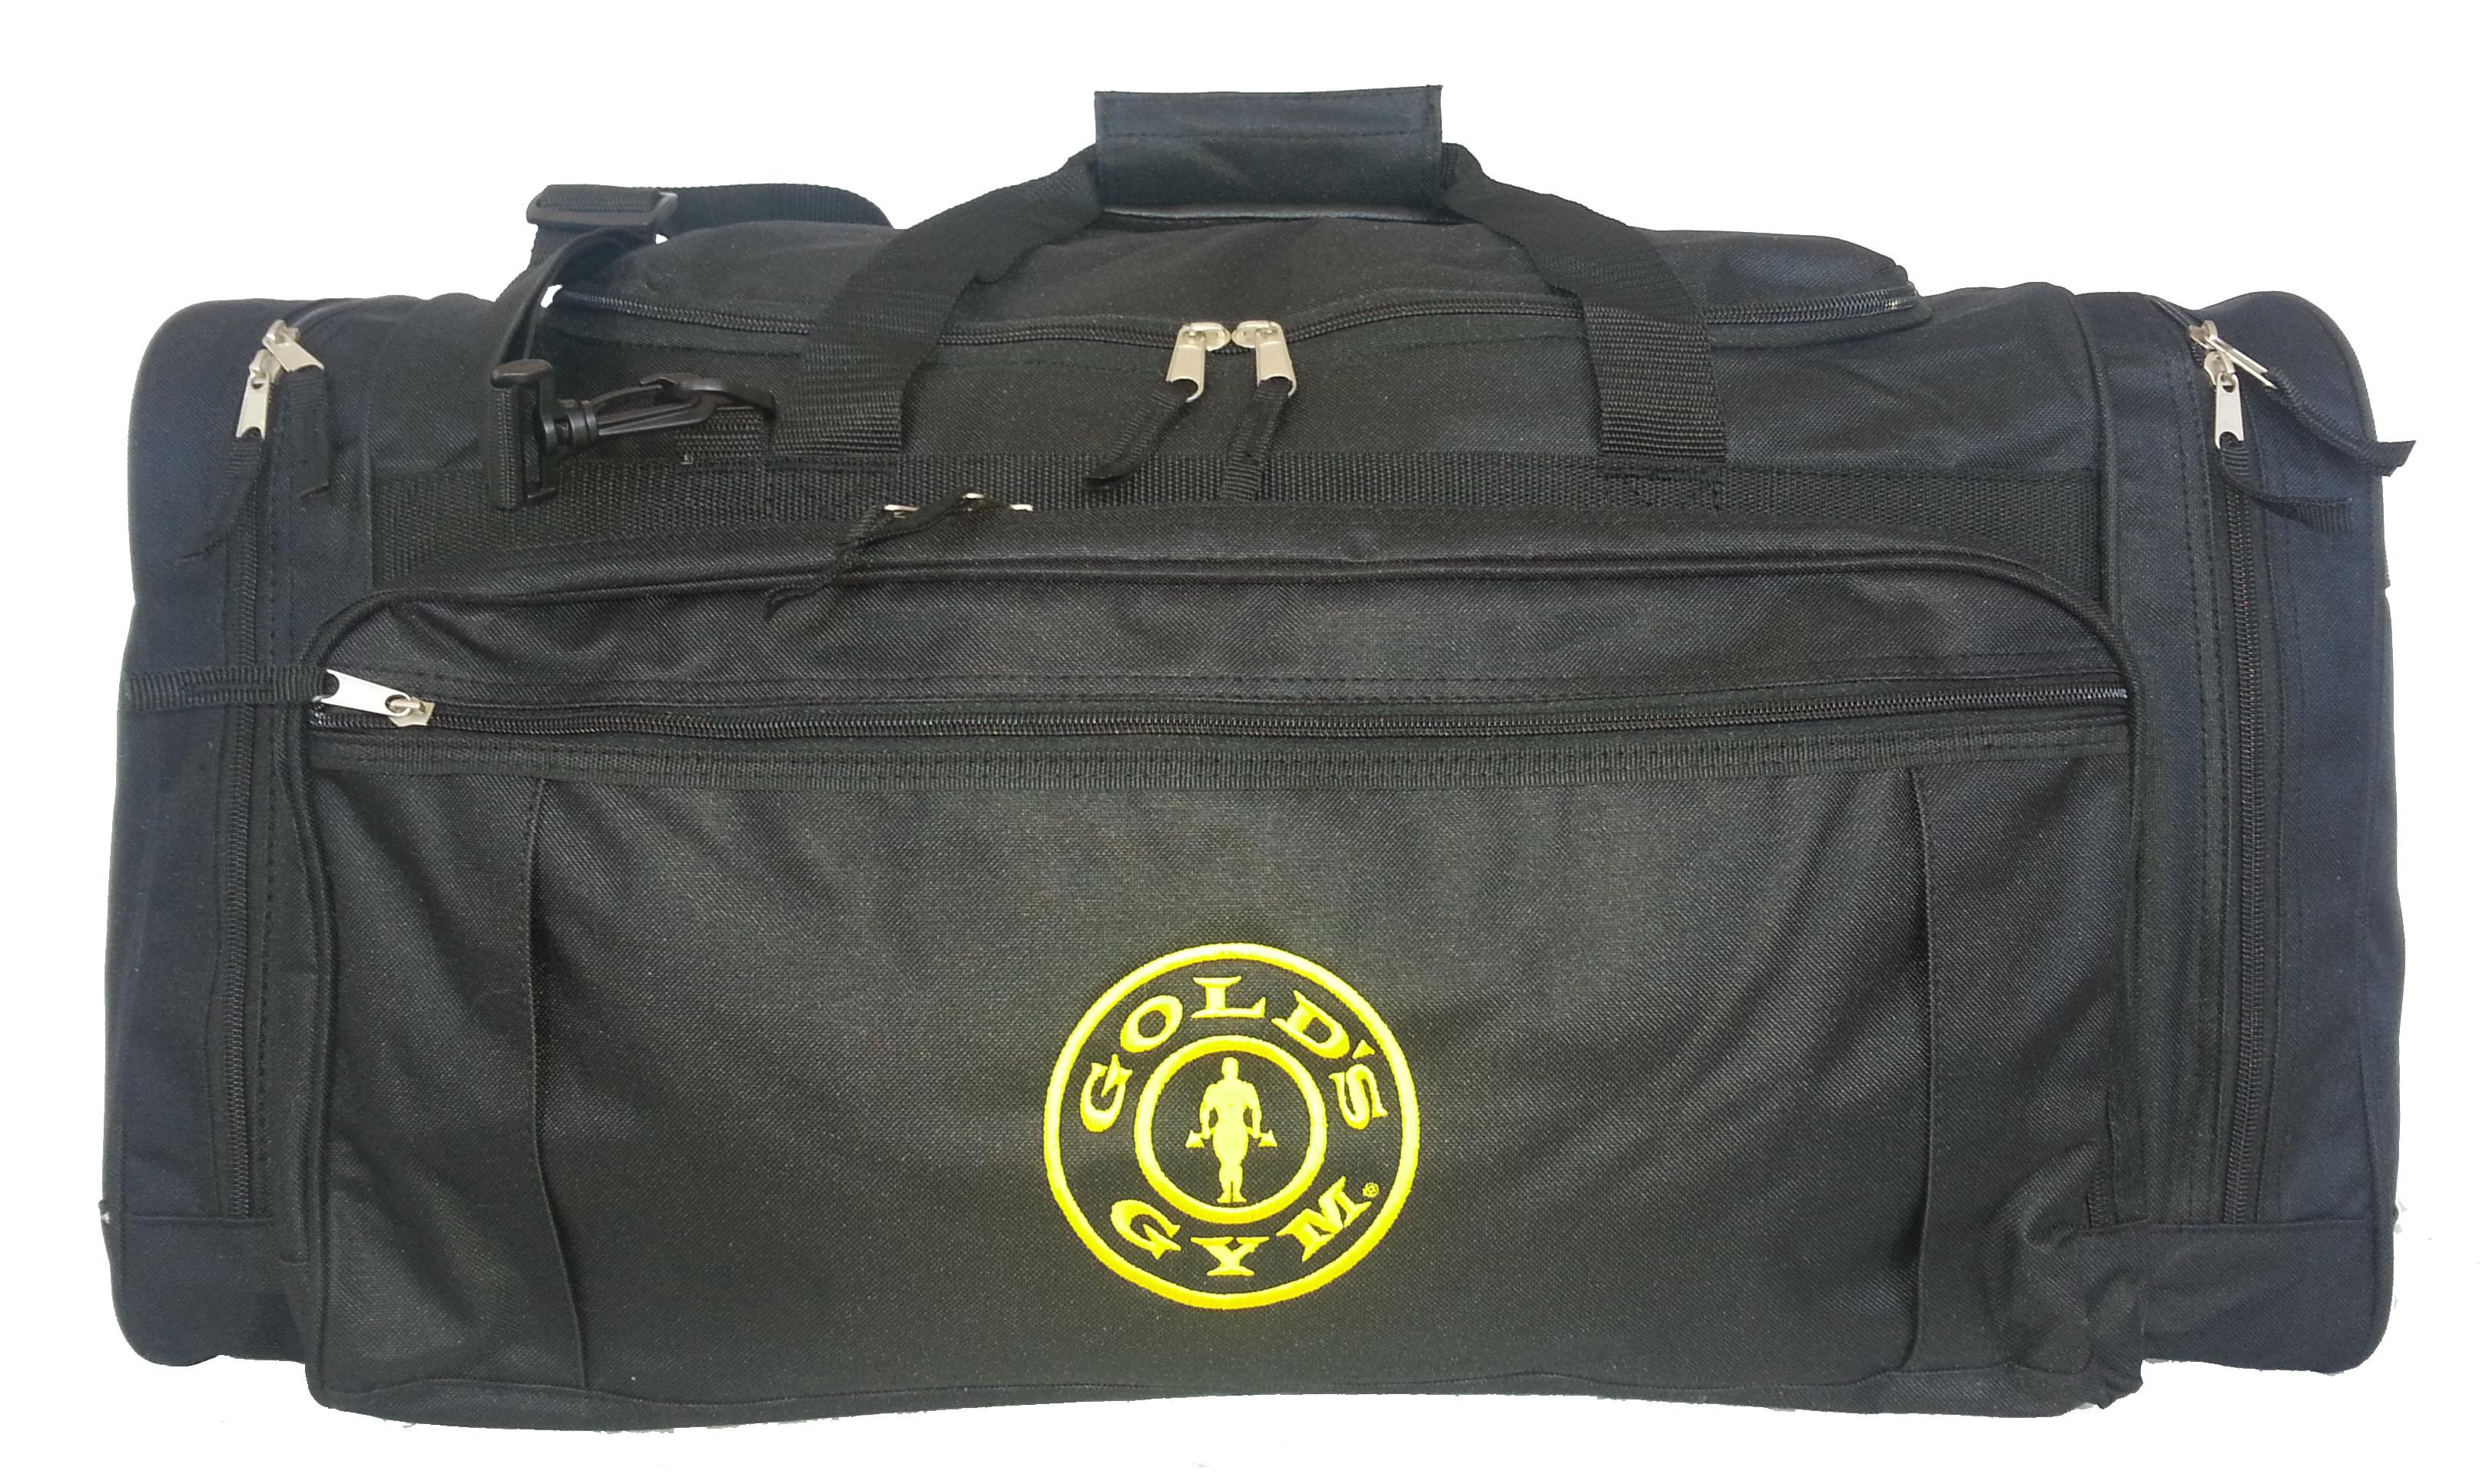 Foto G963 Gold Gym Bag Jumbo Workout Wear Storage Black